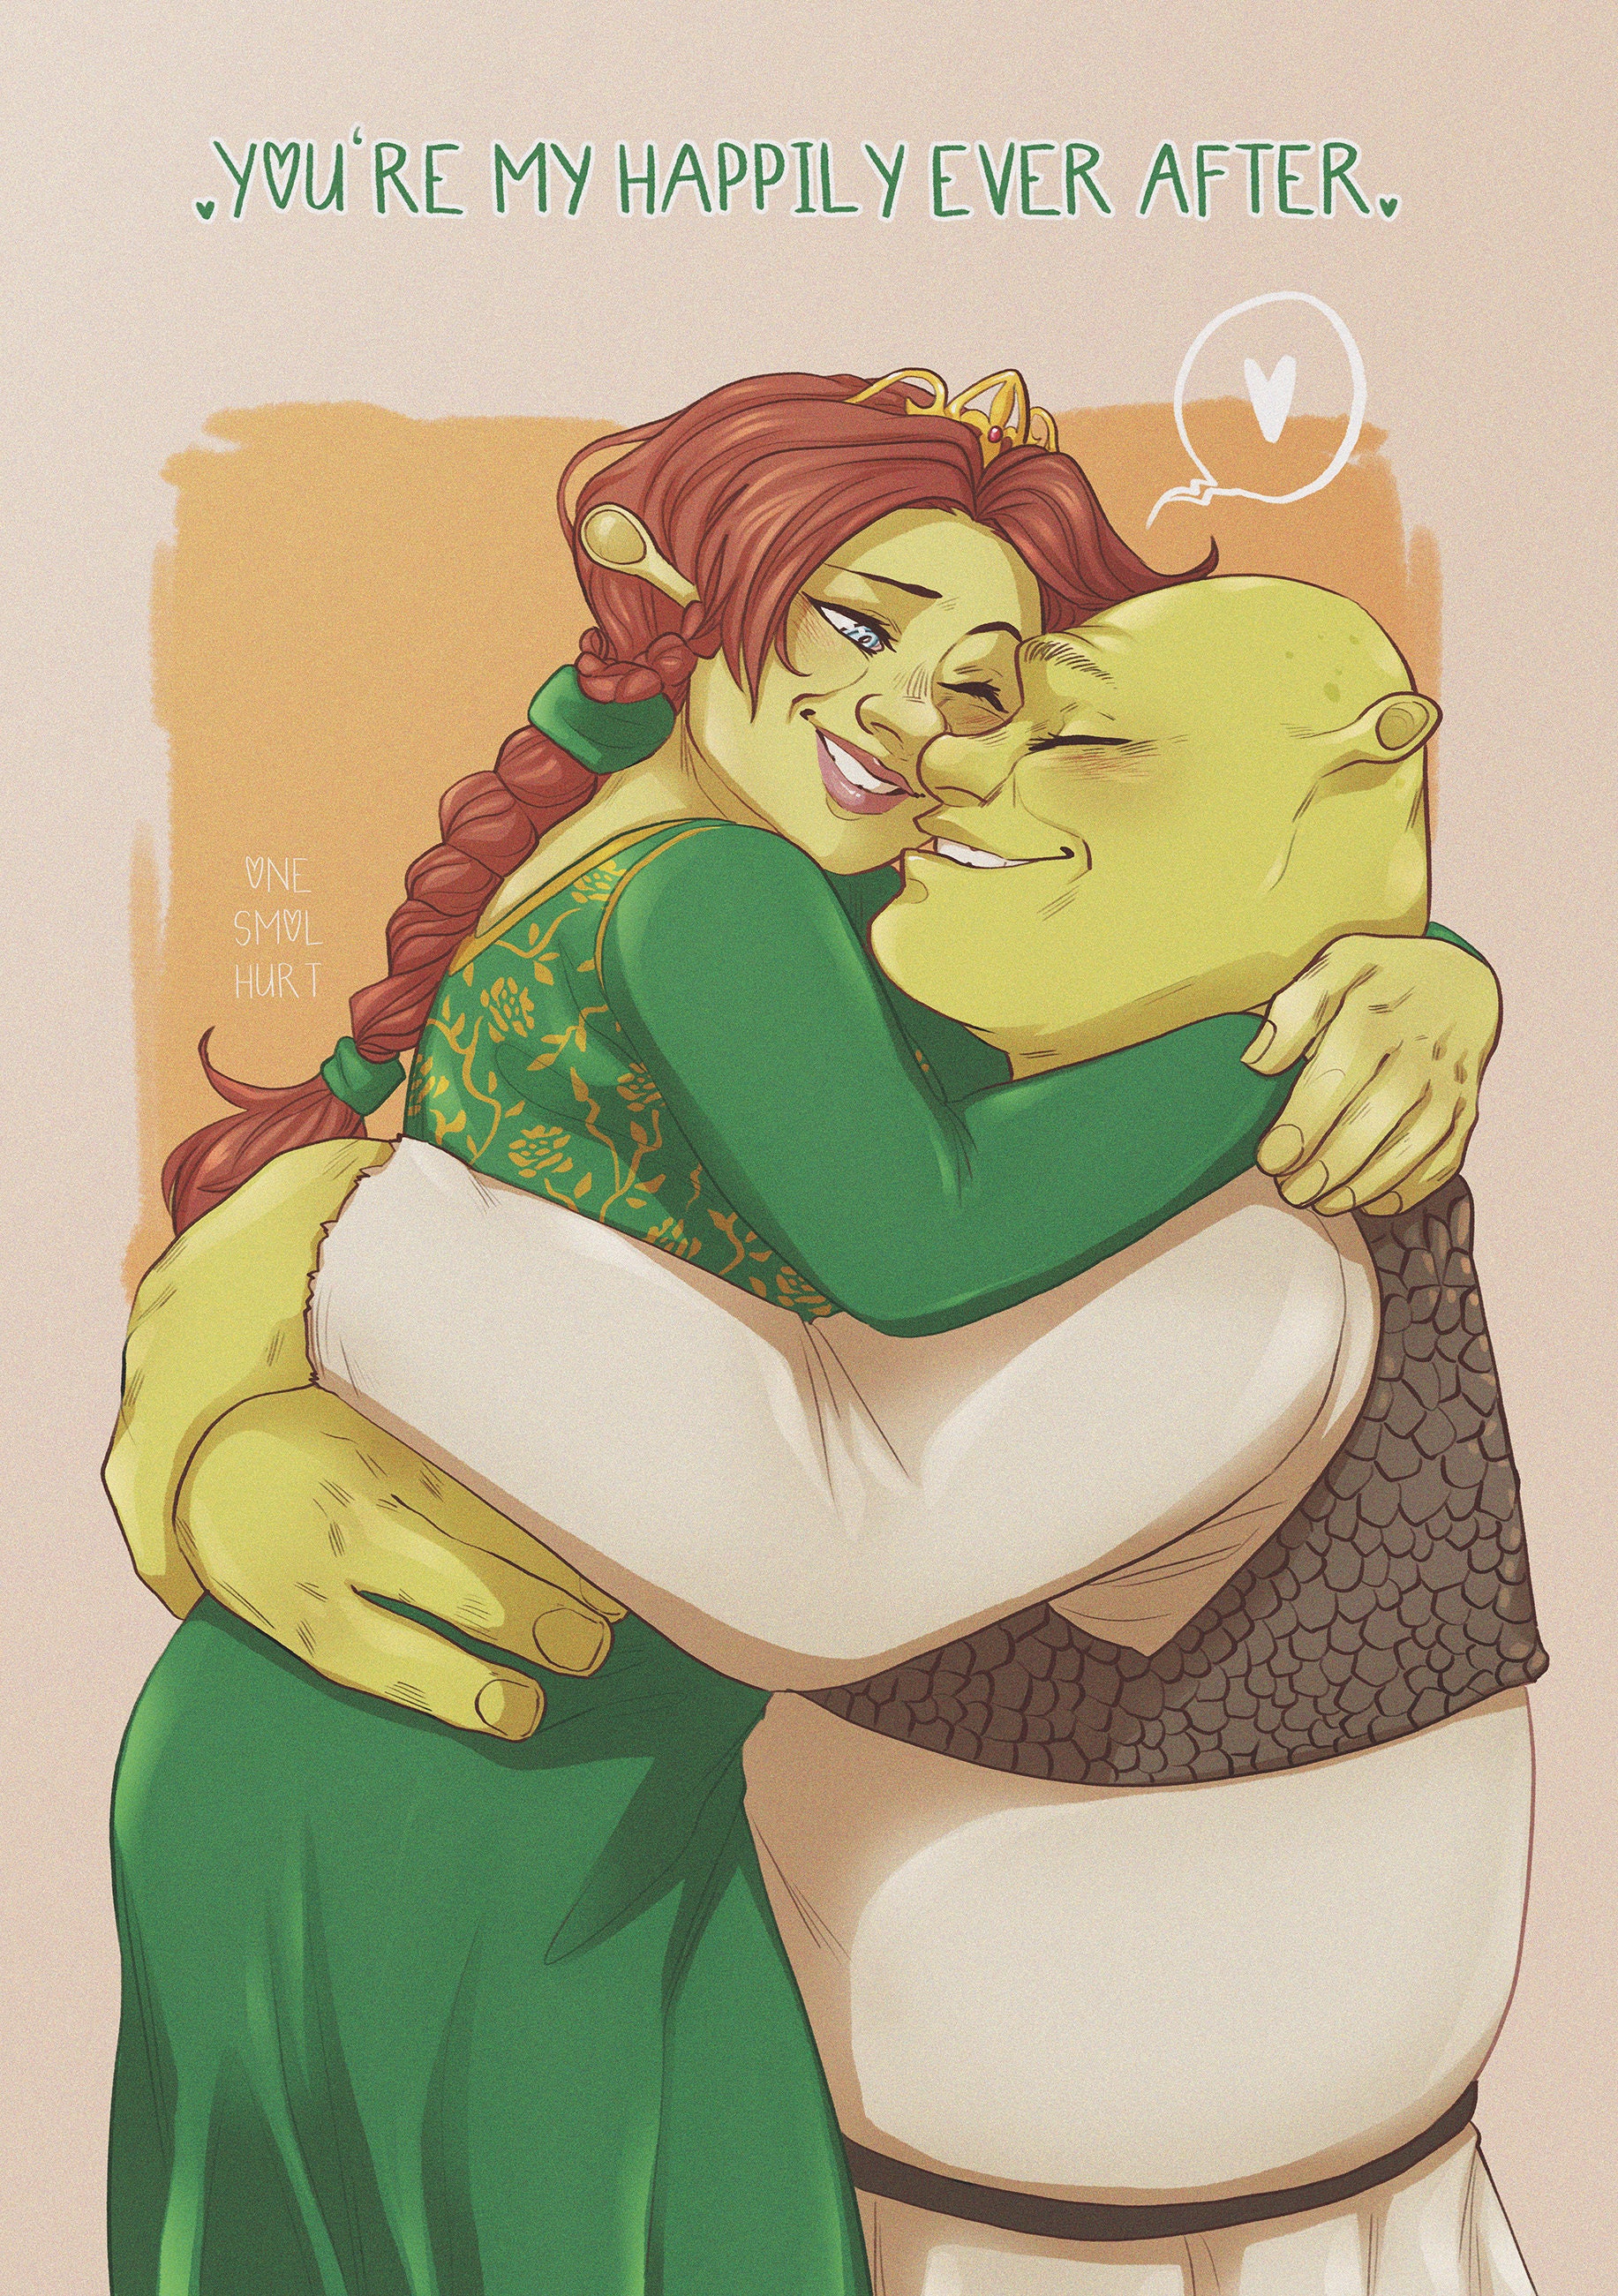 Shrek And Fiona's Love Story